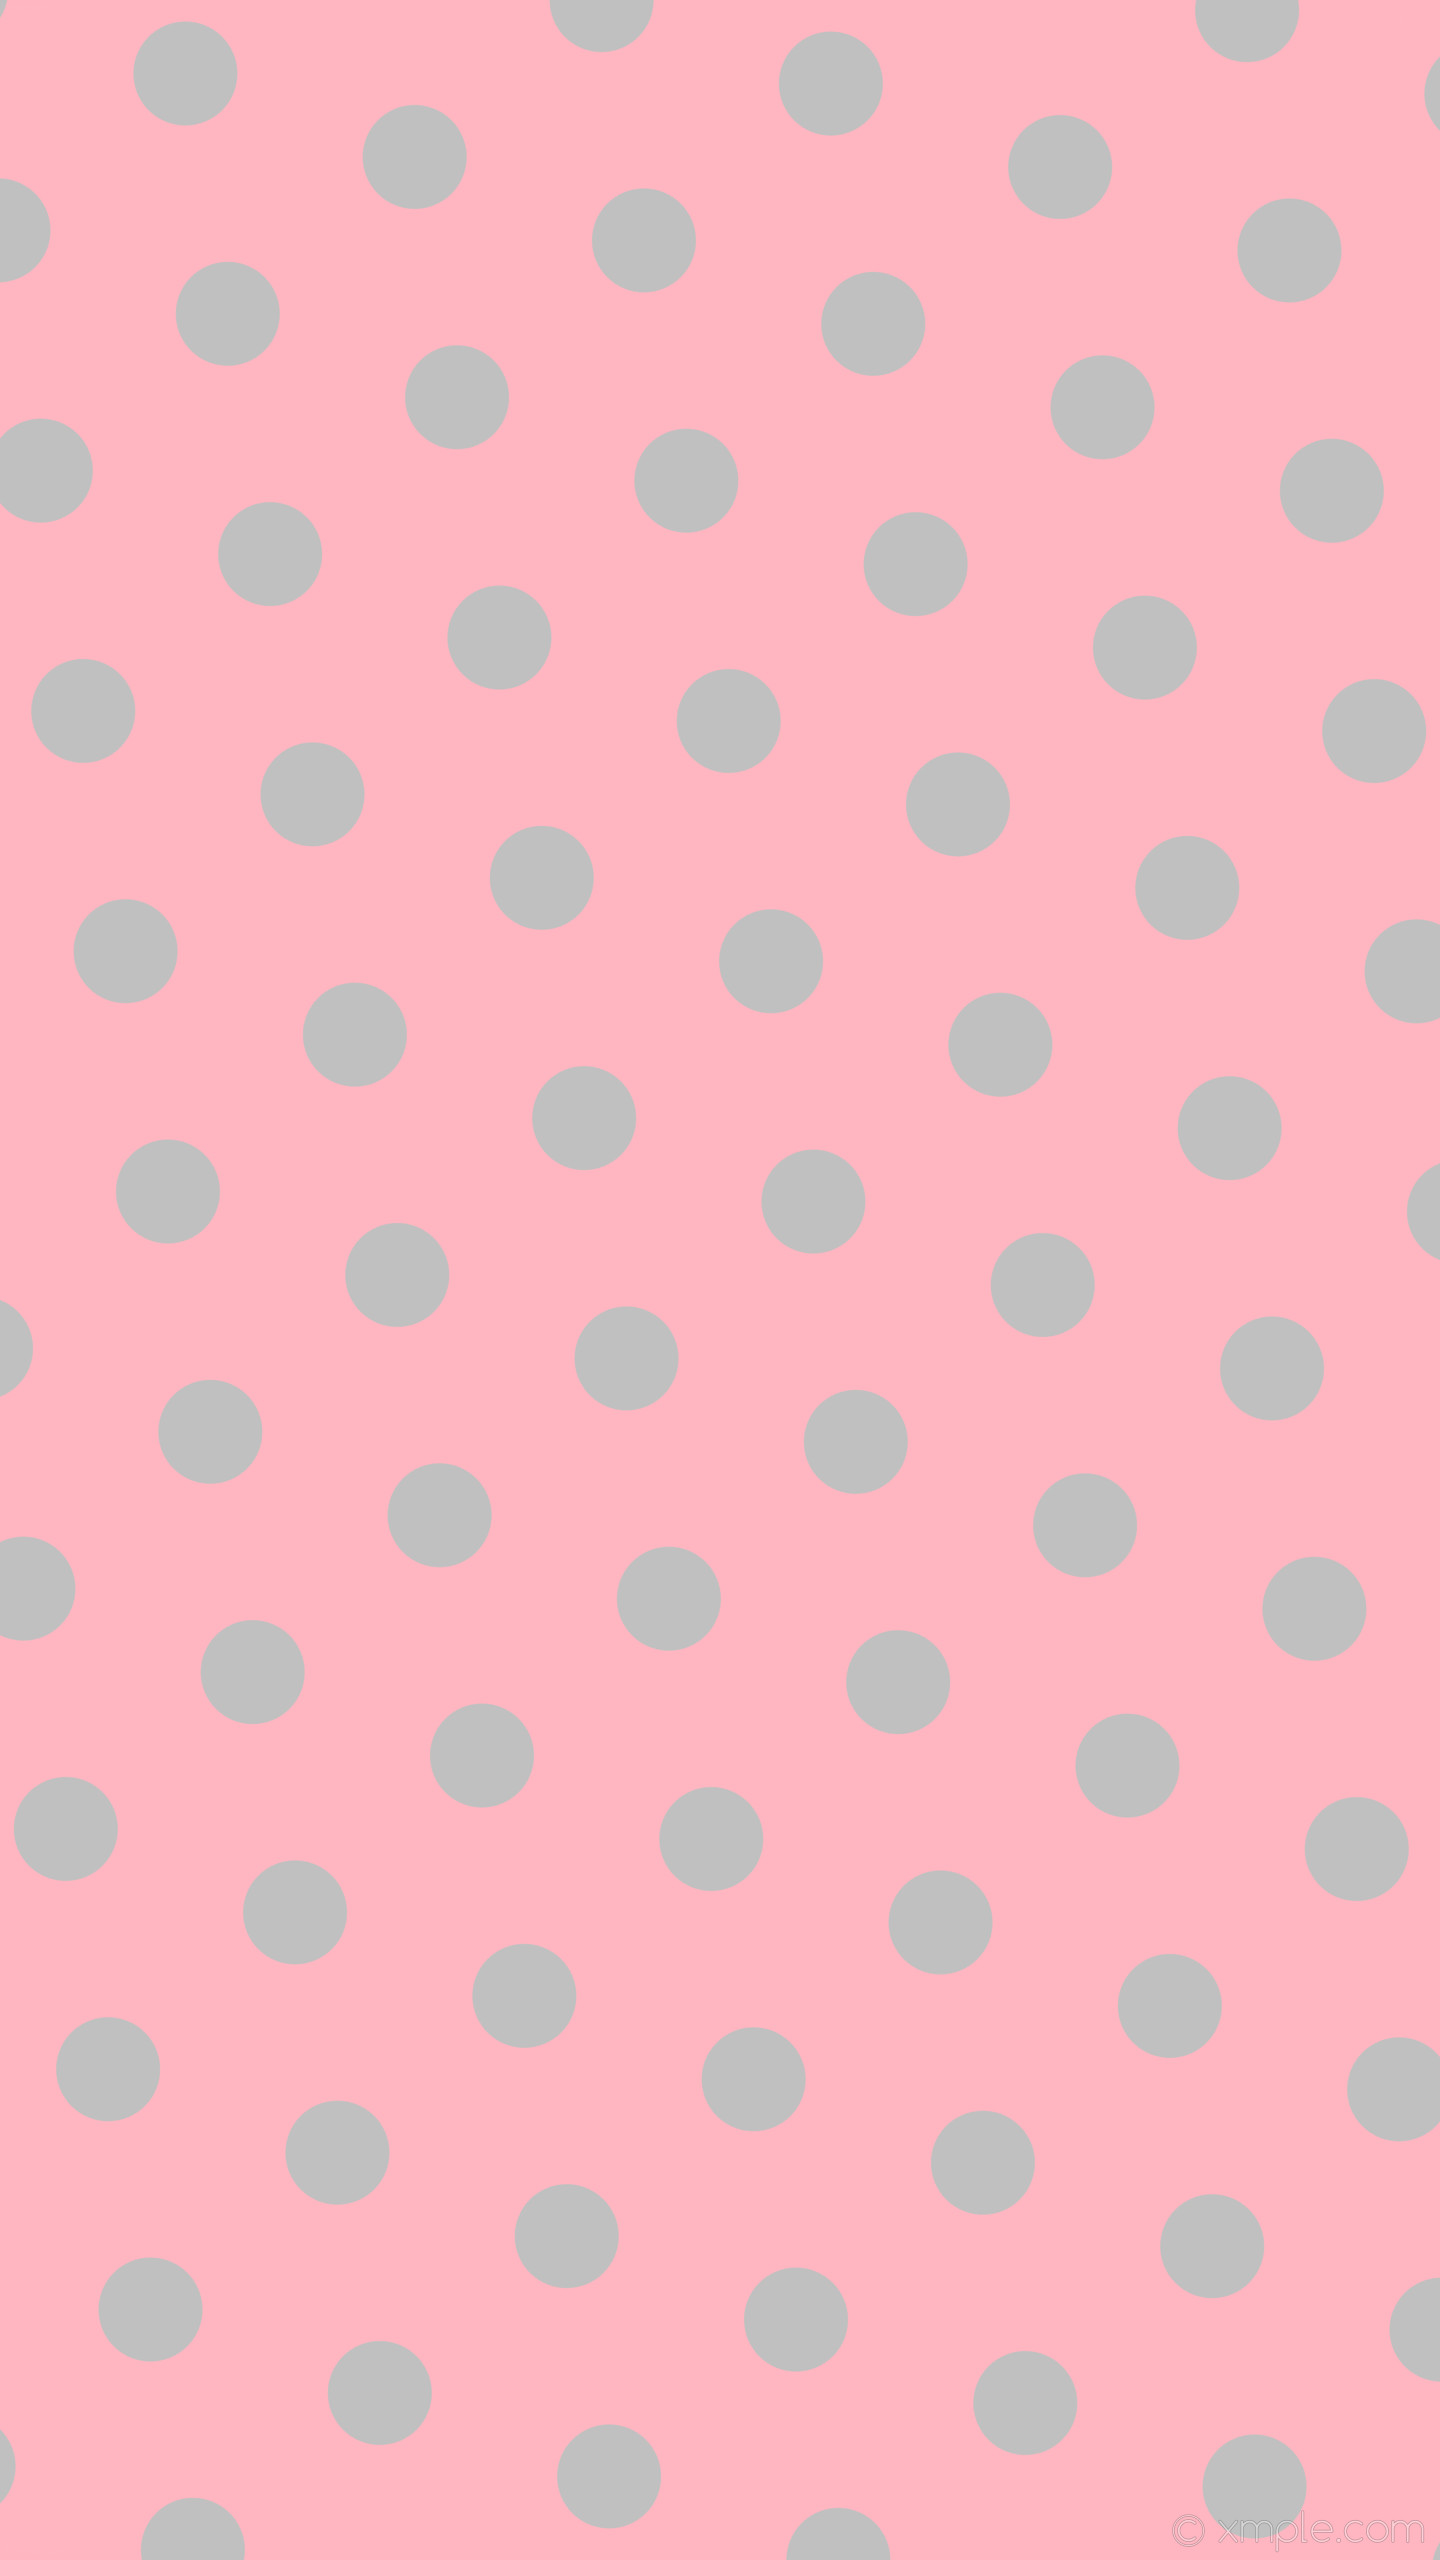 1440x2560 wallpaper pink polka dots hexagon grey light pink silver #ffb6c1 #c0c0c0  diagonal 40Â°